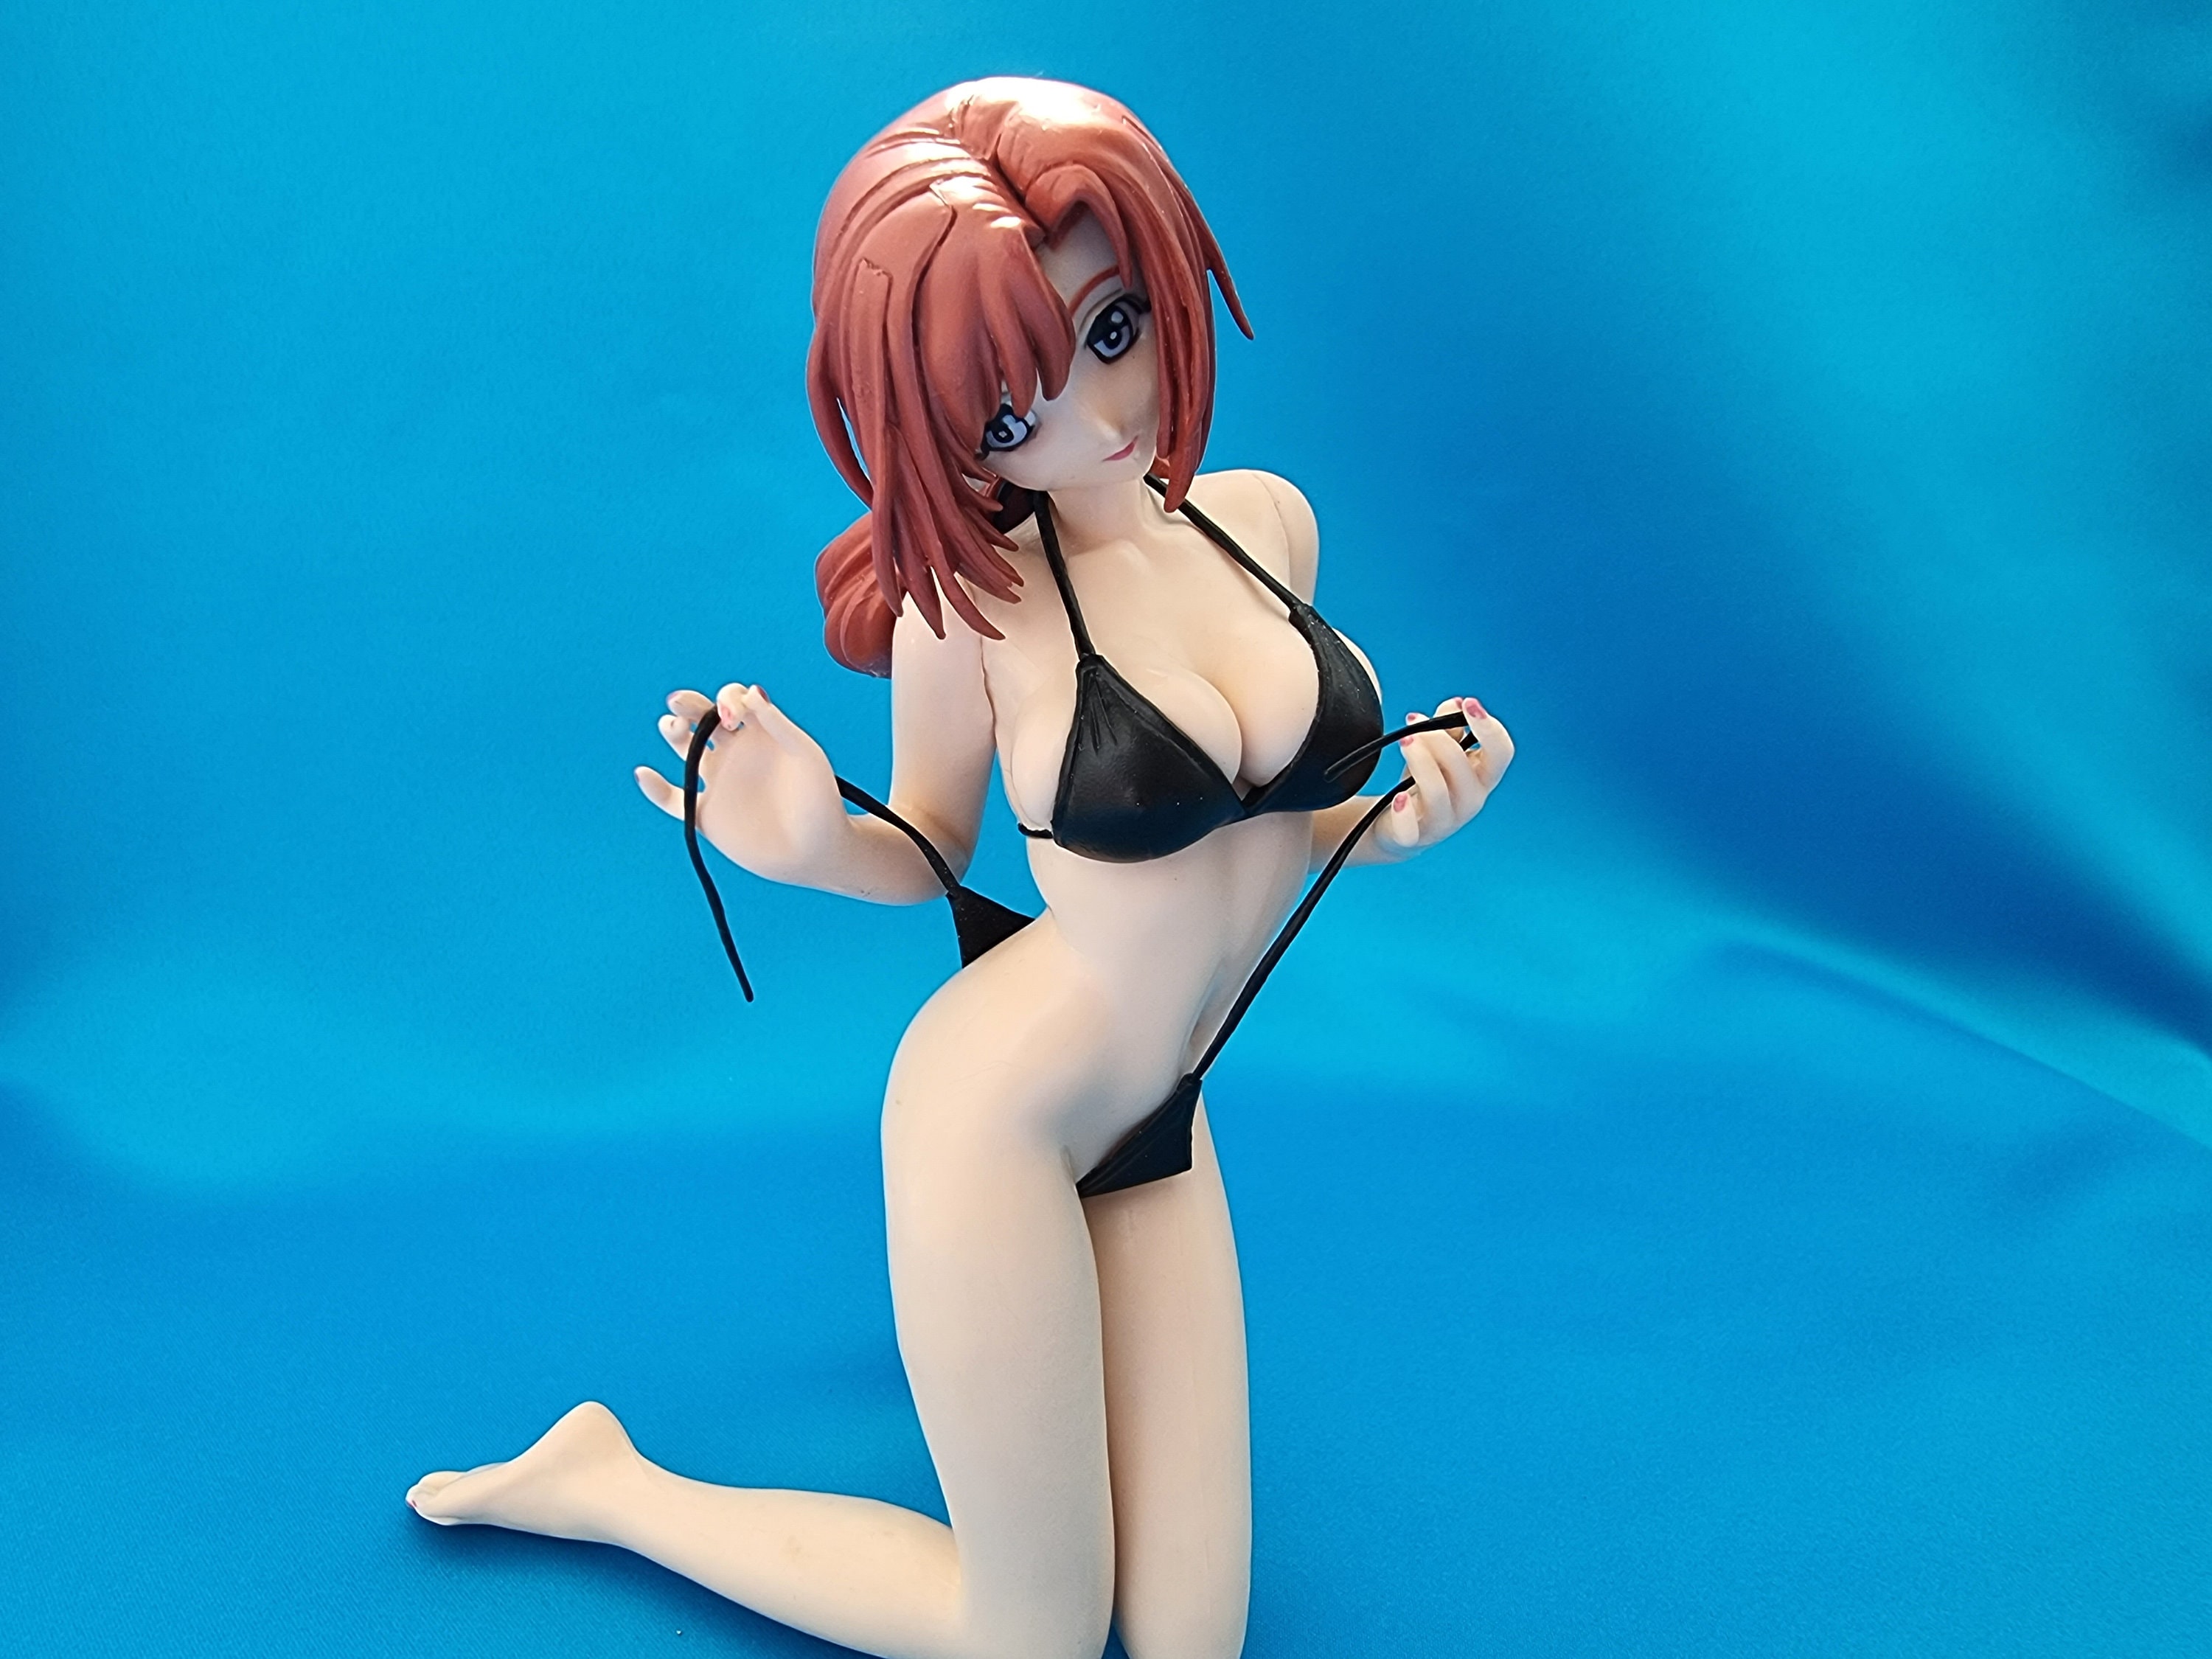 Anime Figures Hentai - Hentai Sex Figurines - Etsy